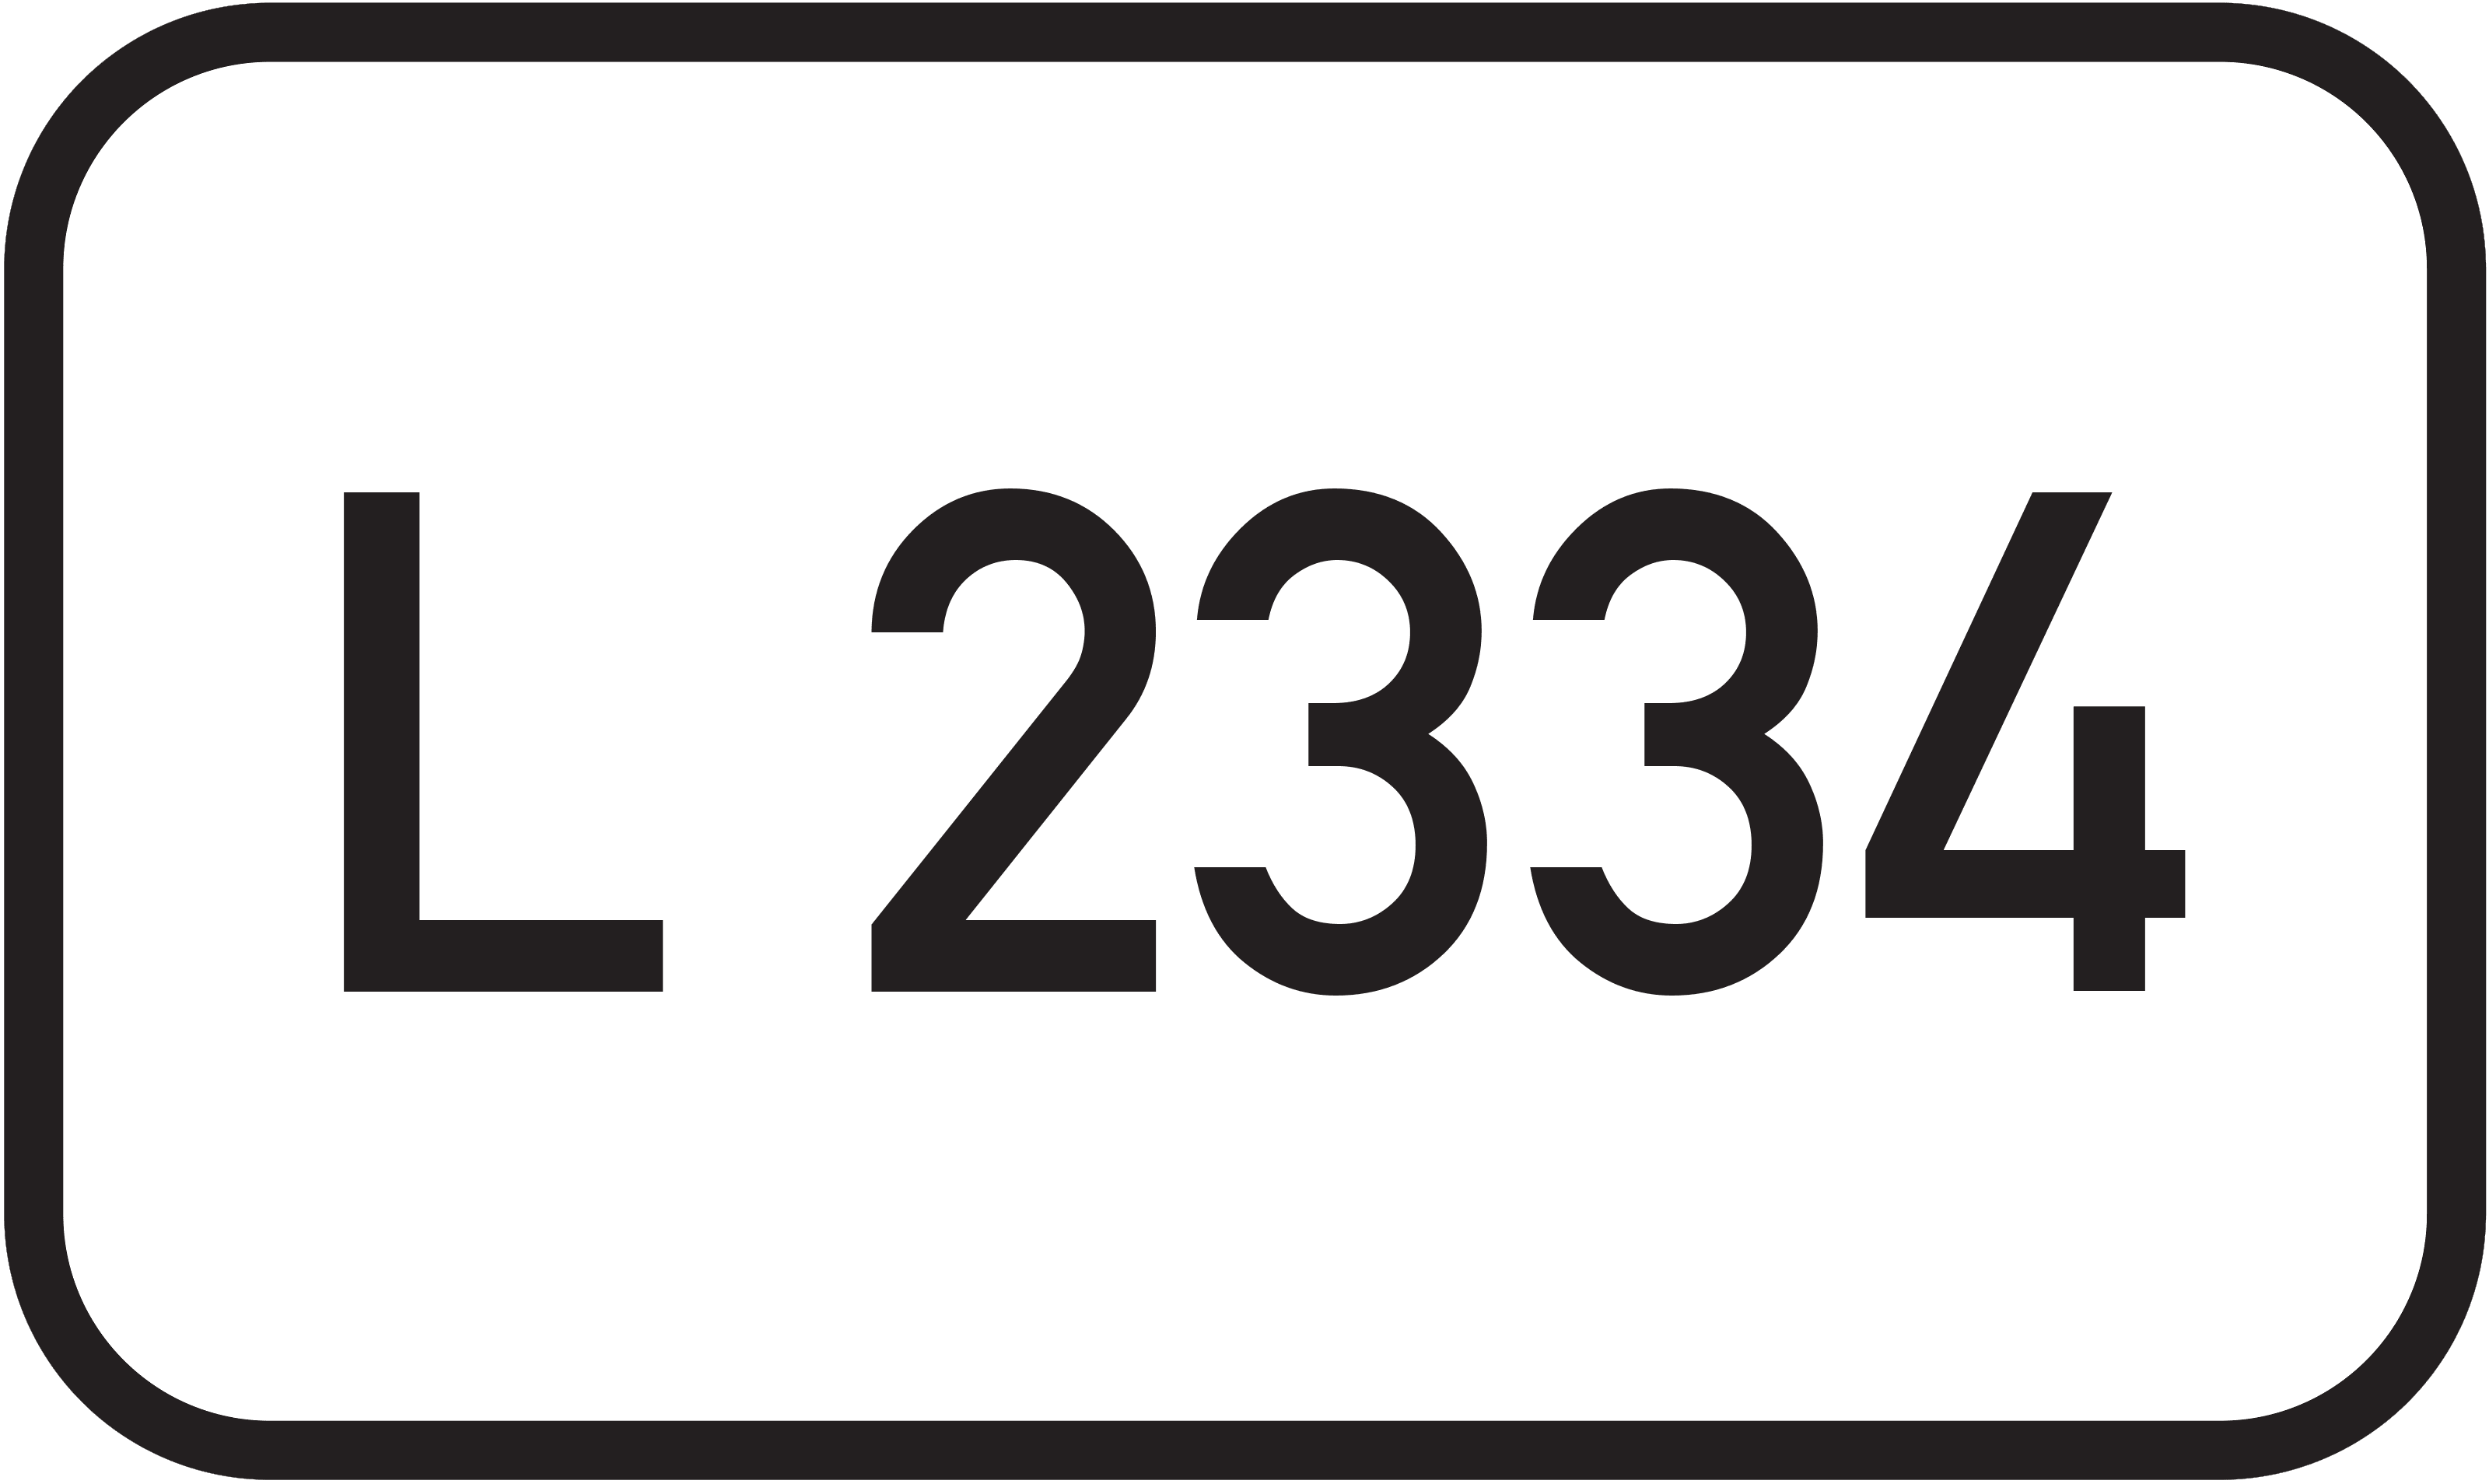 Straßenschild Landesstraße L 2334